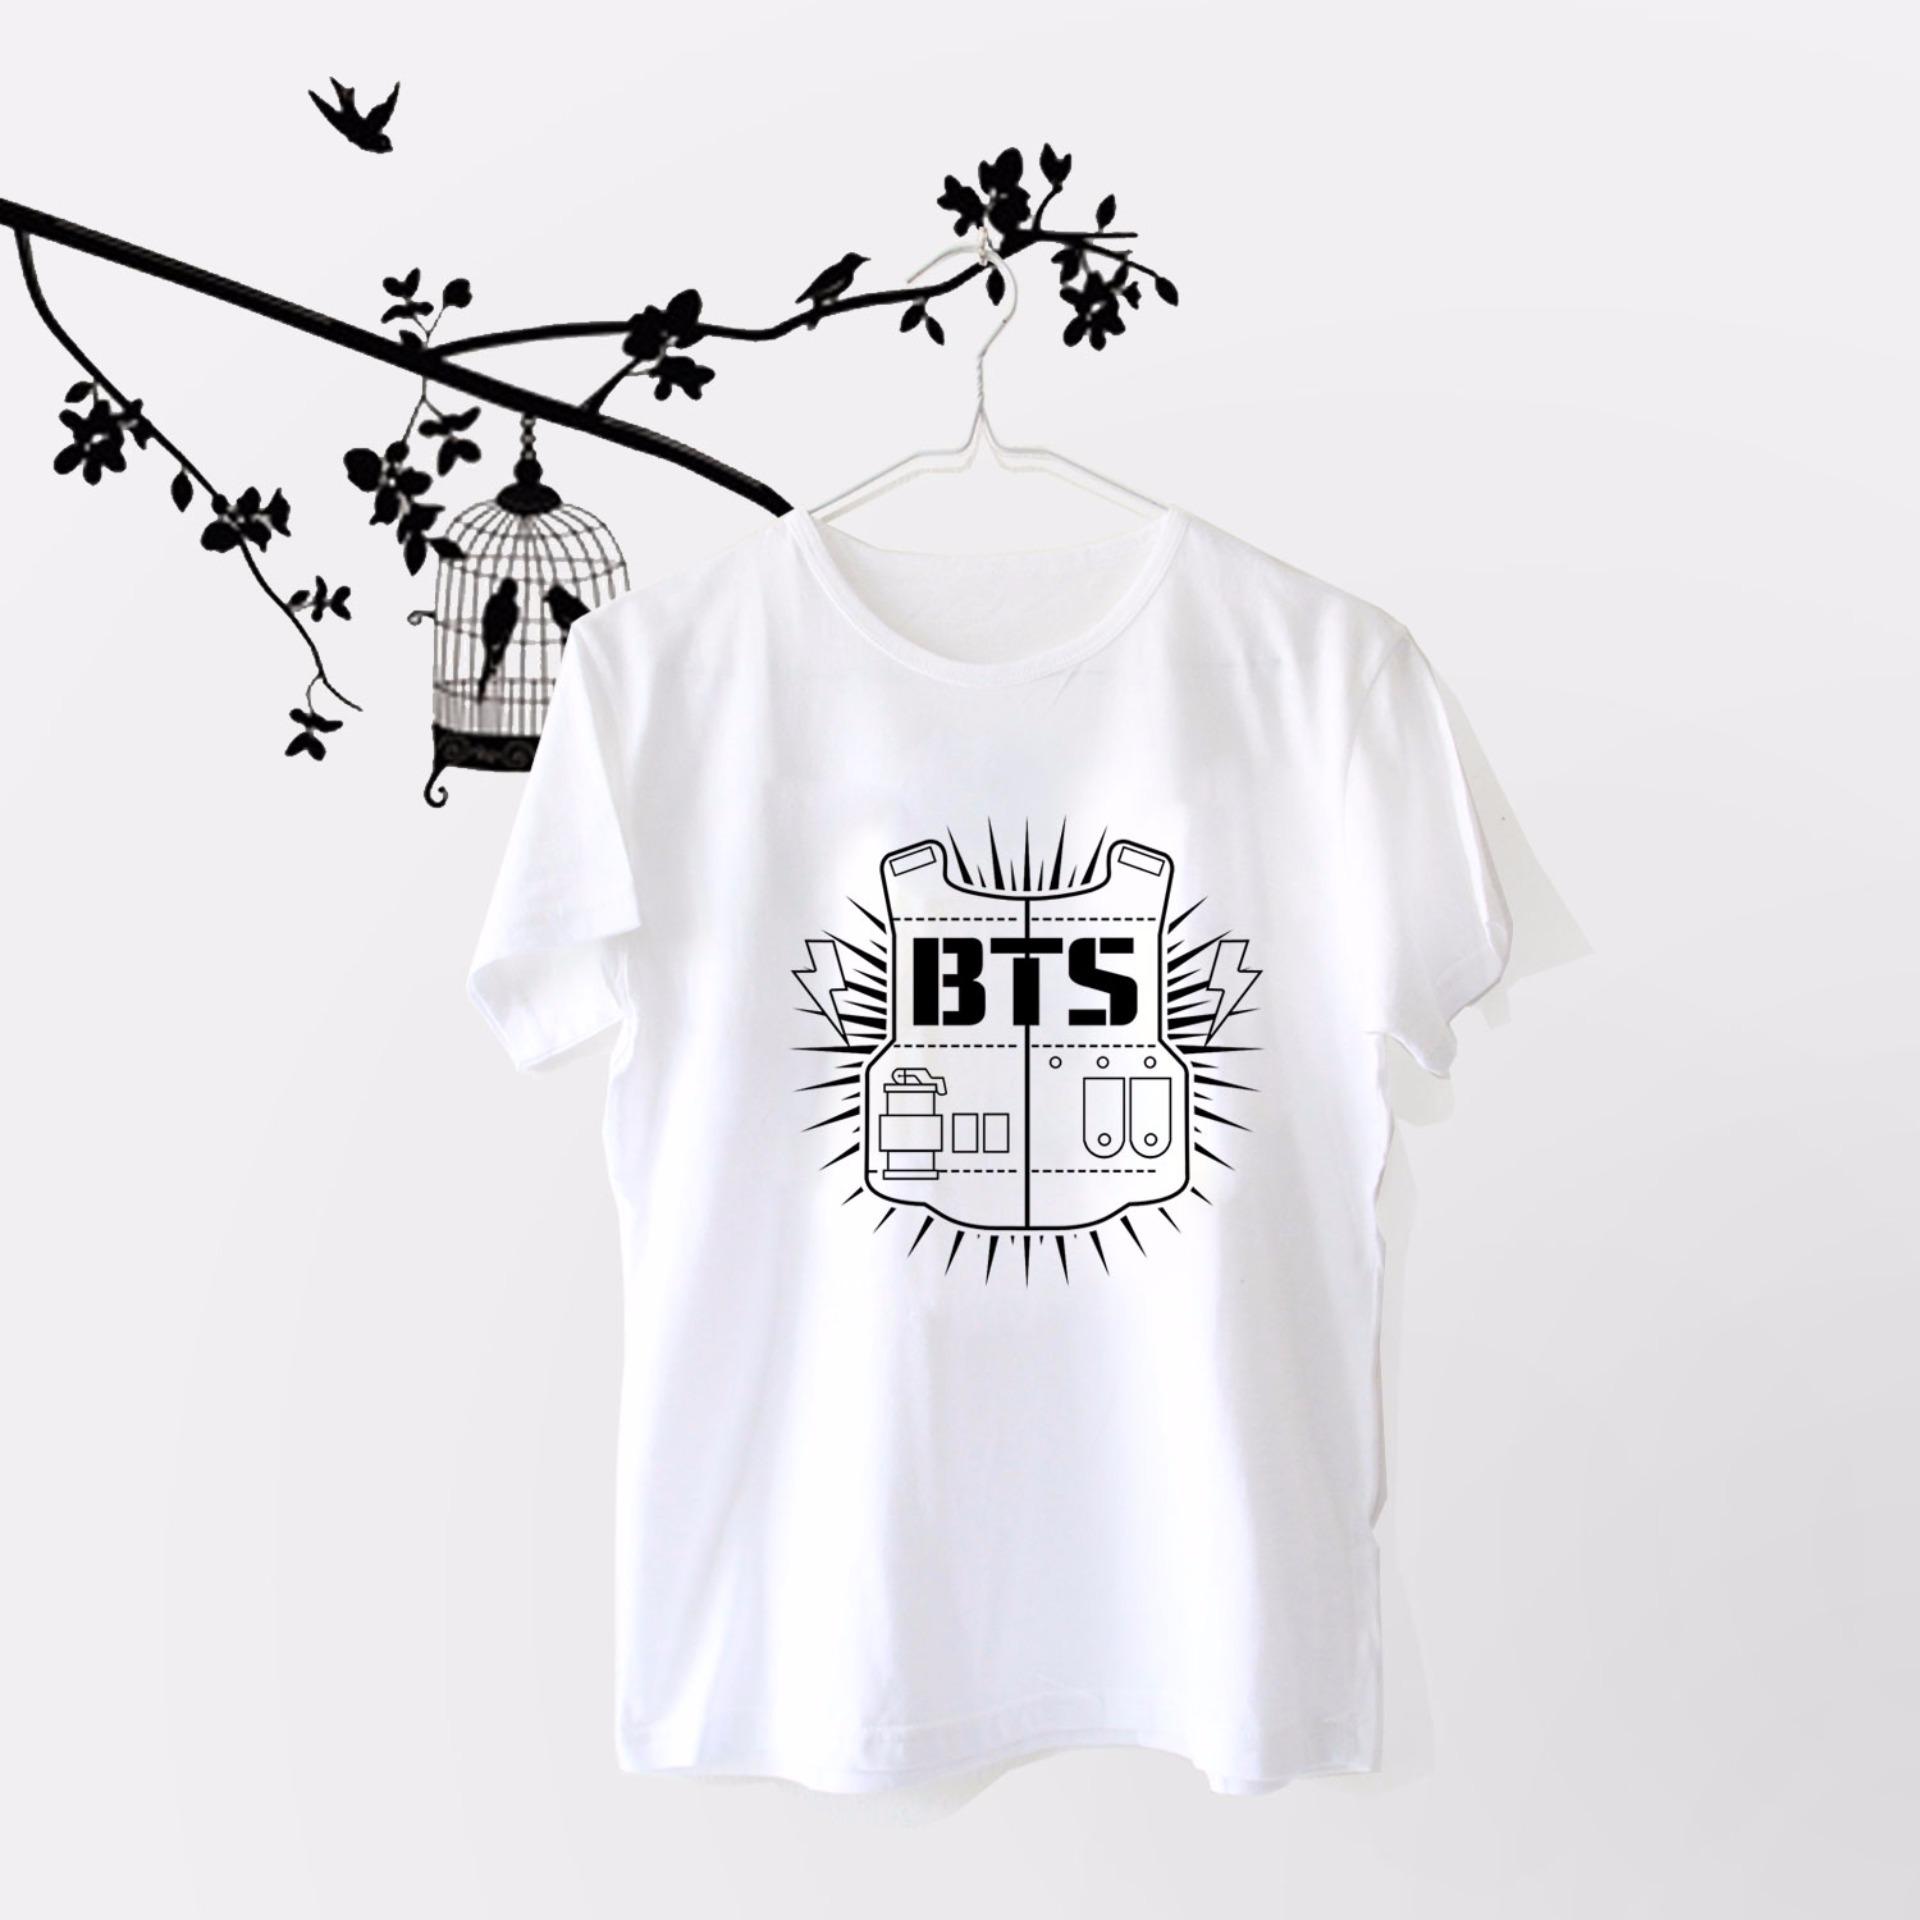 ELLIPSES.INC Tumblr Tee / T-Shirt / Kaos Wanita Bts - Putih